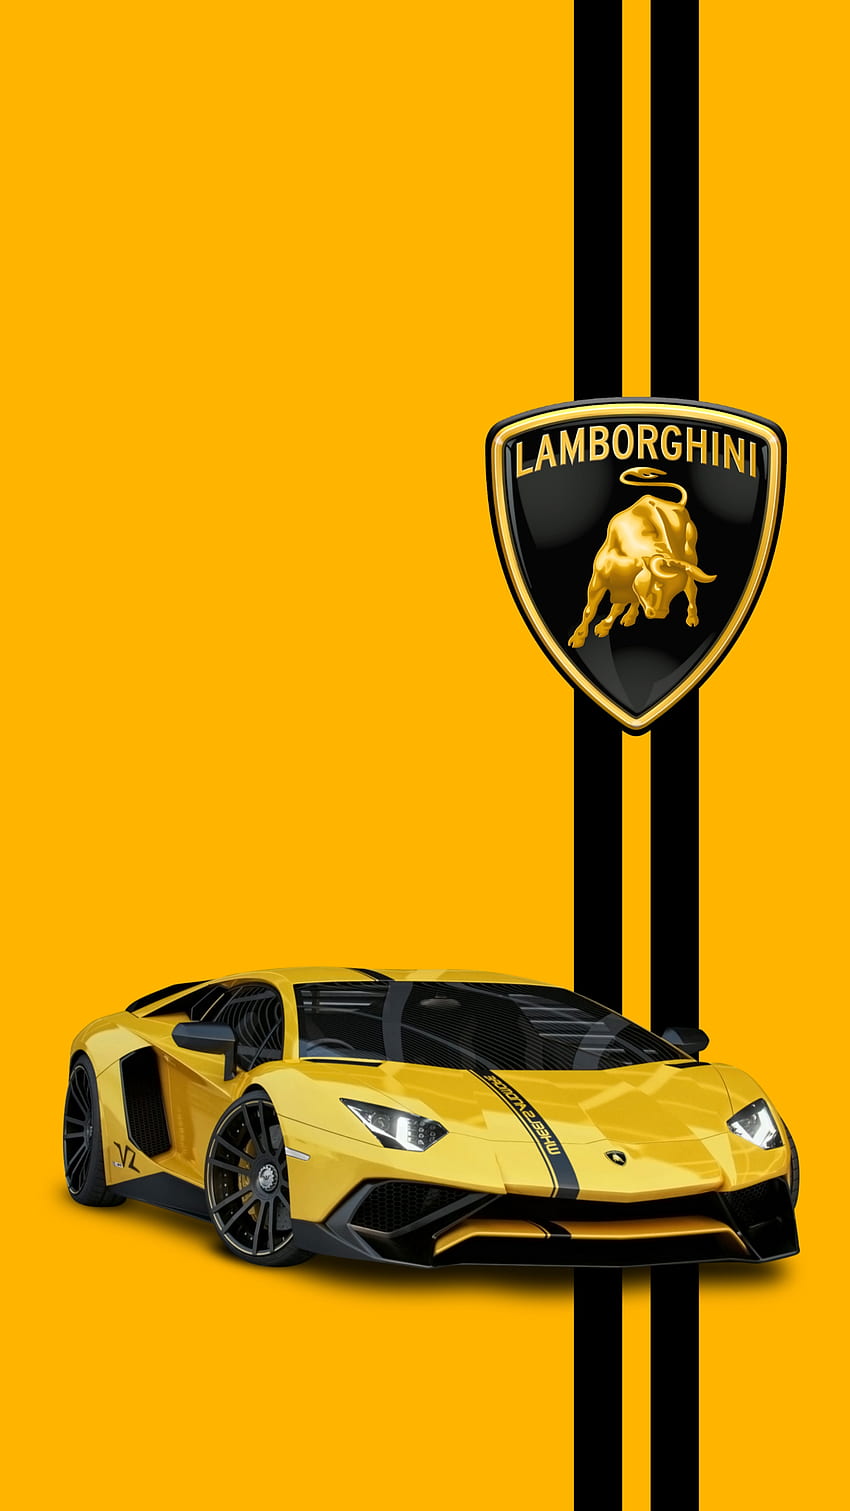 Lamborghini, Ferrari, samochody, samochody wyścigowe, samochody sportowe, samochód, Bugatti, ford, mastang Tapeta na telefon HD